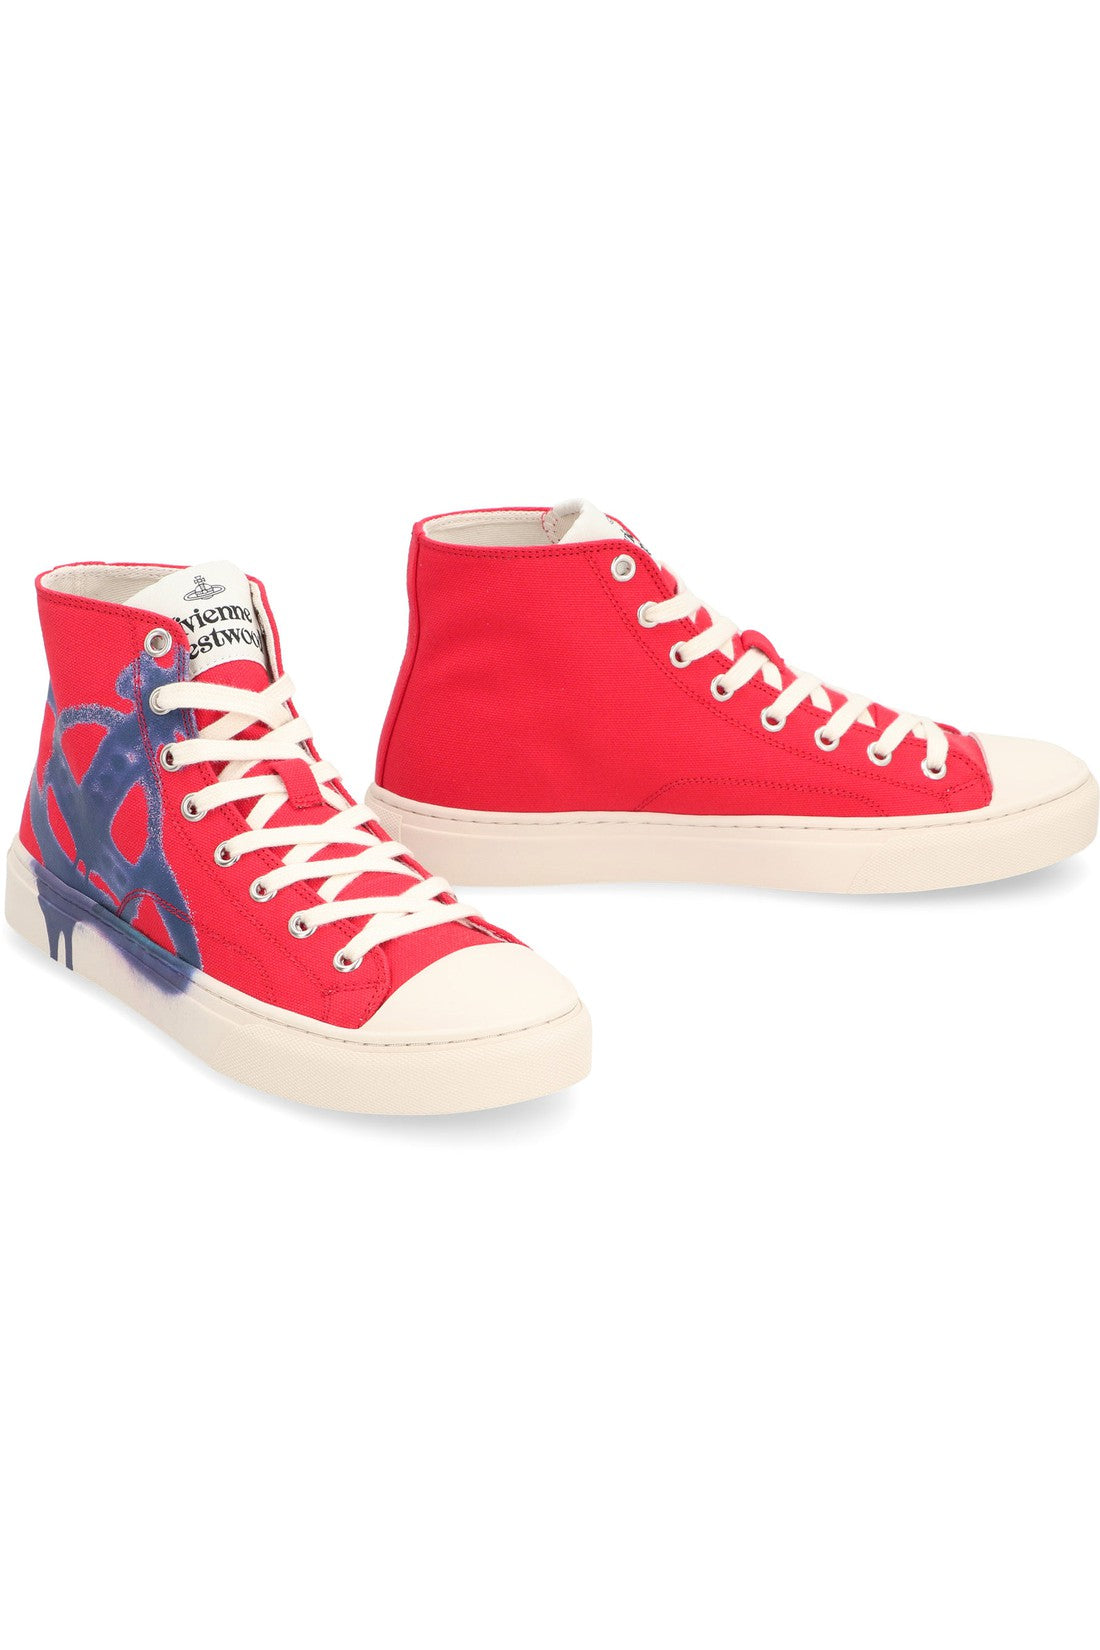 Vivienne Westwood-OUTLET-SALE-Plimsoll high-top sneakers-ARCHIVIST